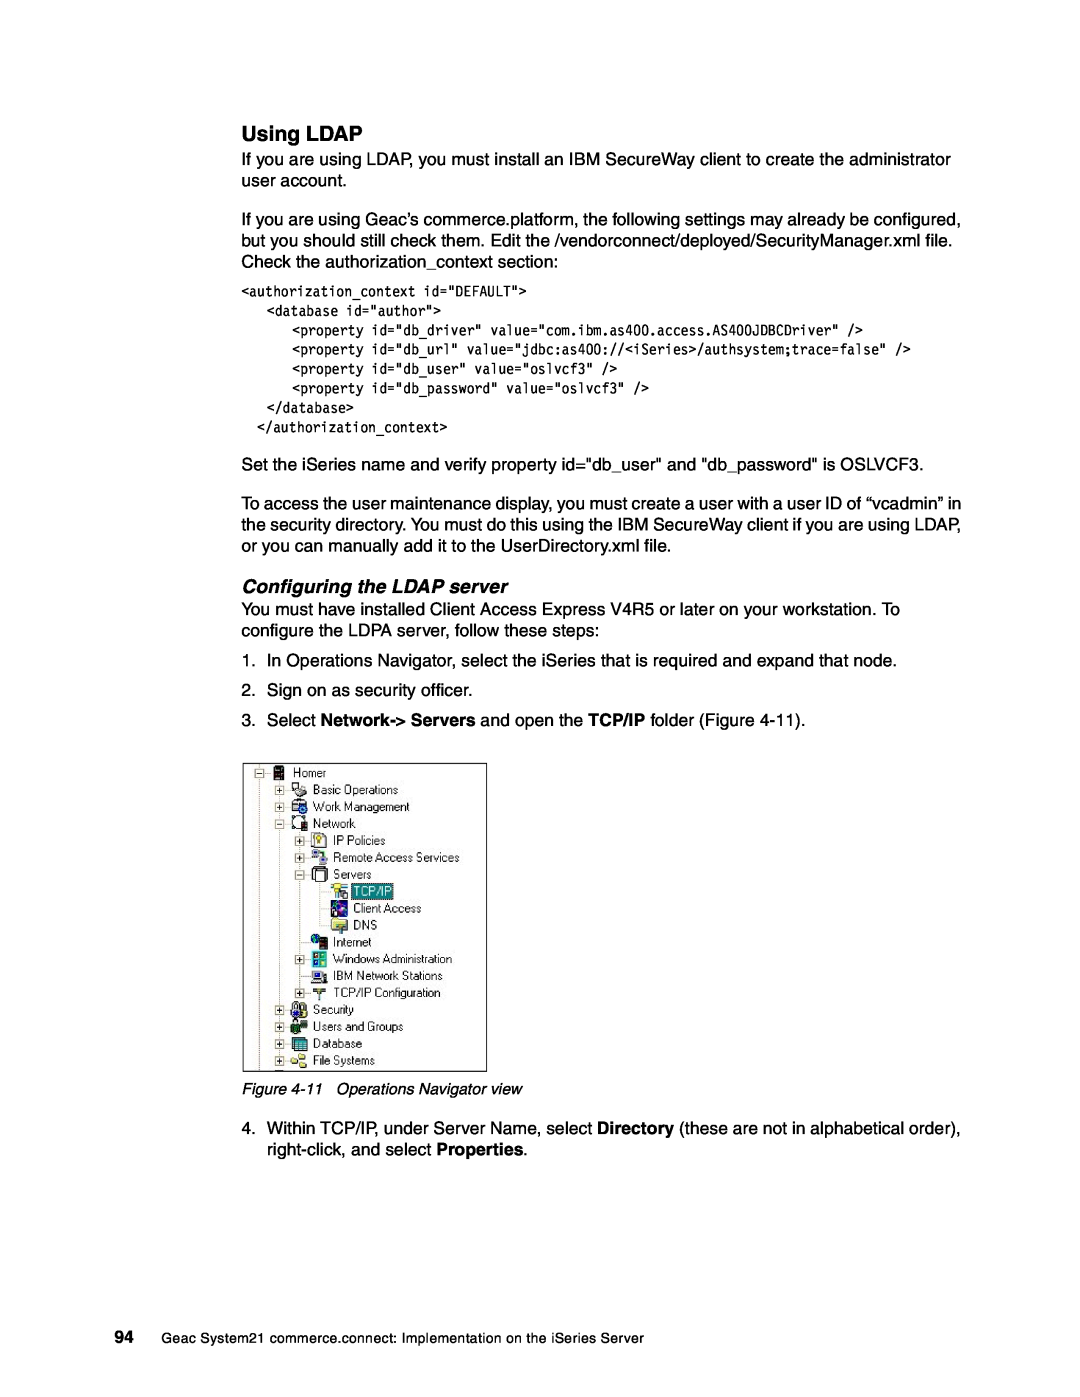 IBM SG24-6526-00 manual Using LDAP, Configuring the LDAP server 